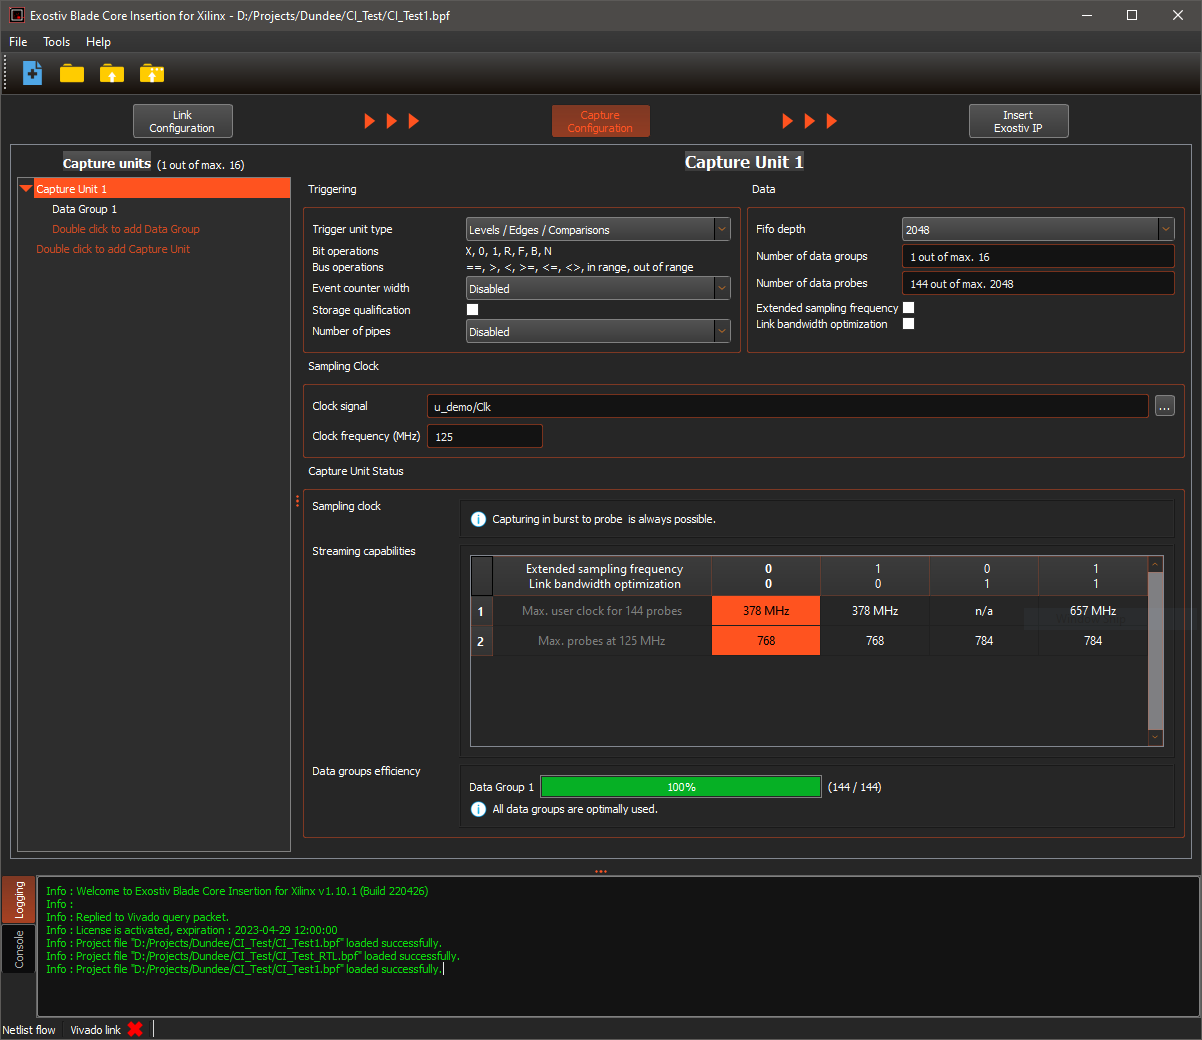 Exostiv Blade Core Inserter software capture configuration screen